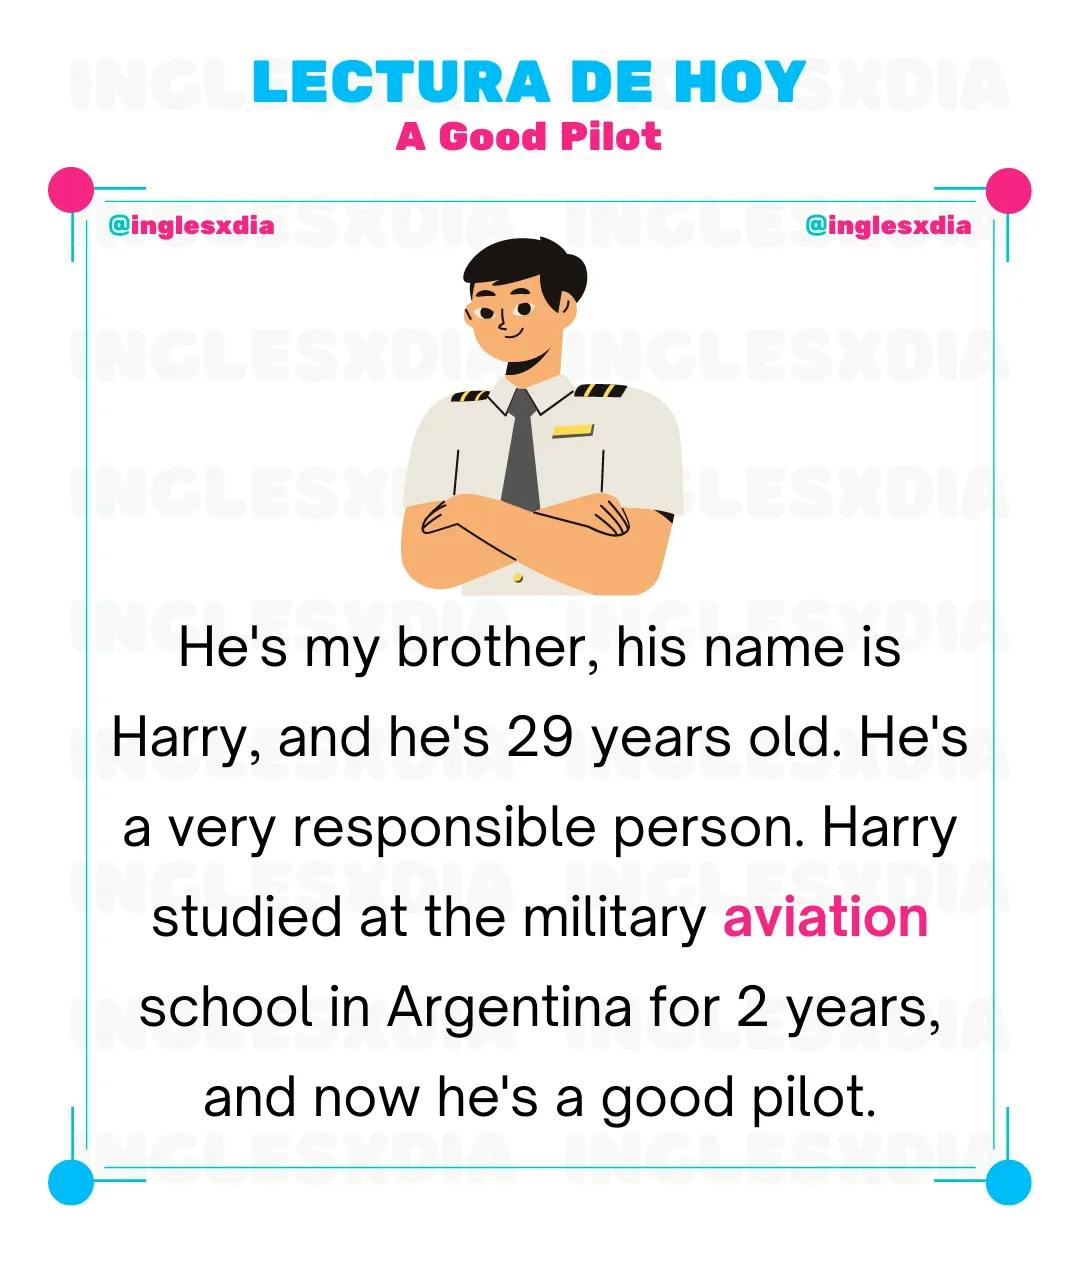 A Good Pilot